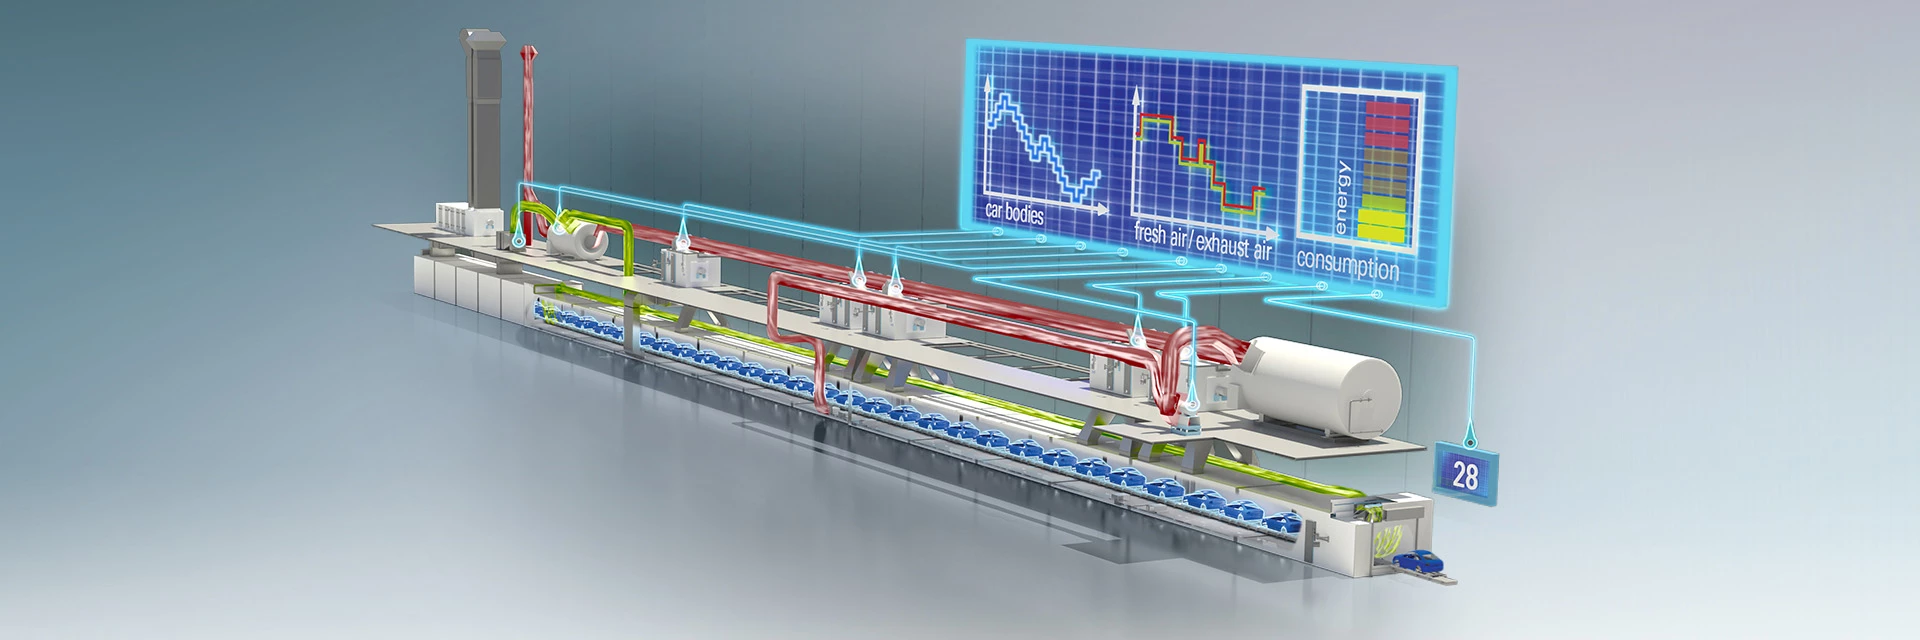 Dürr's EcoSMart VEC is suitable to provide "energy on demand"